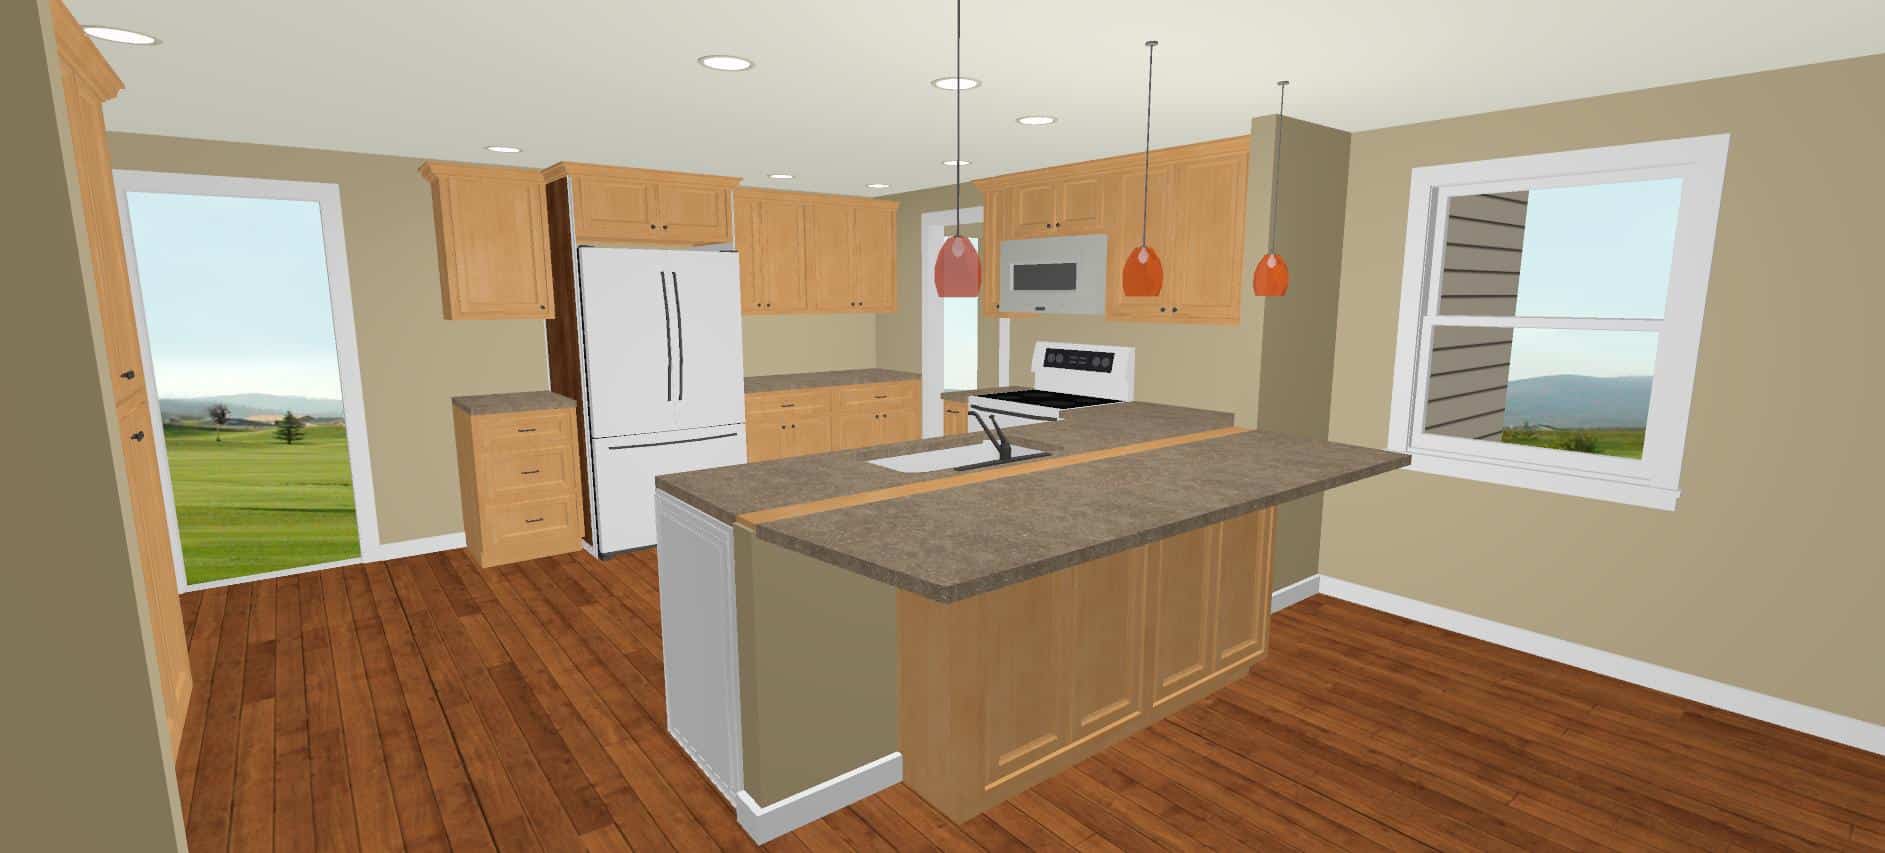 kitchen remodel render